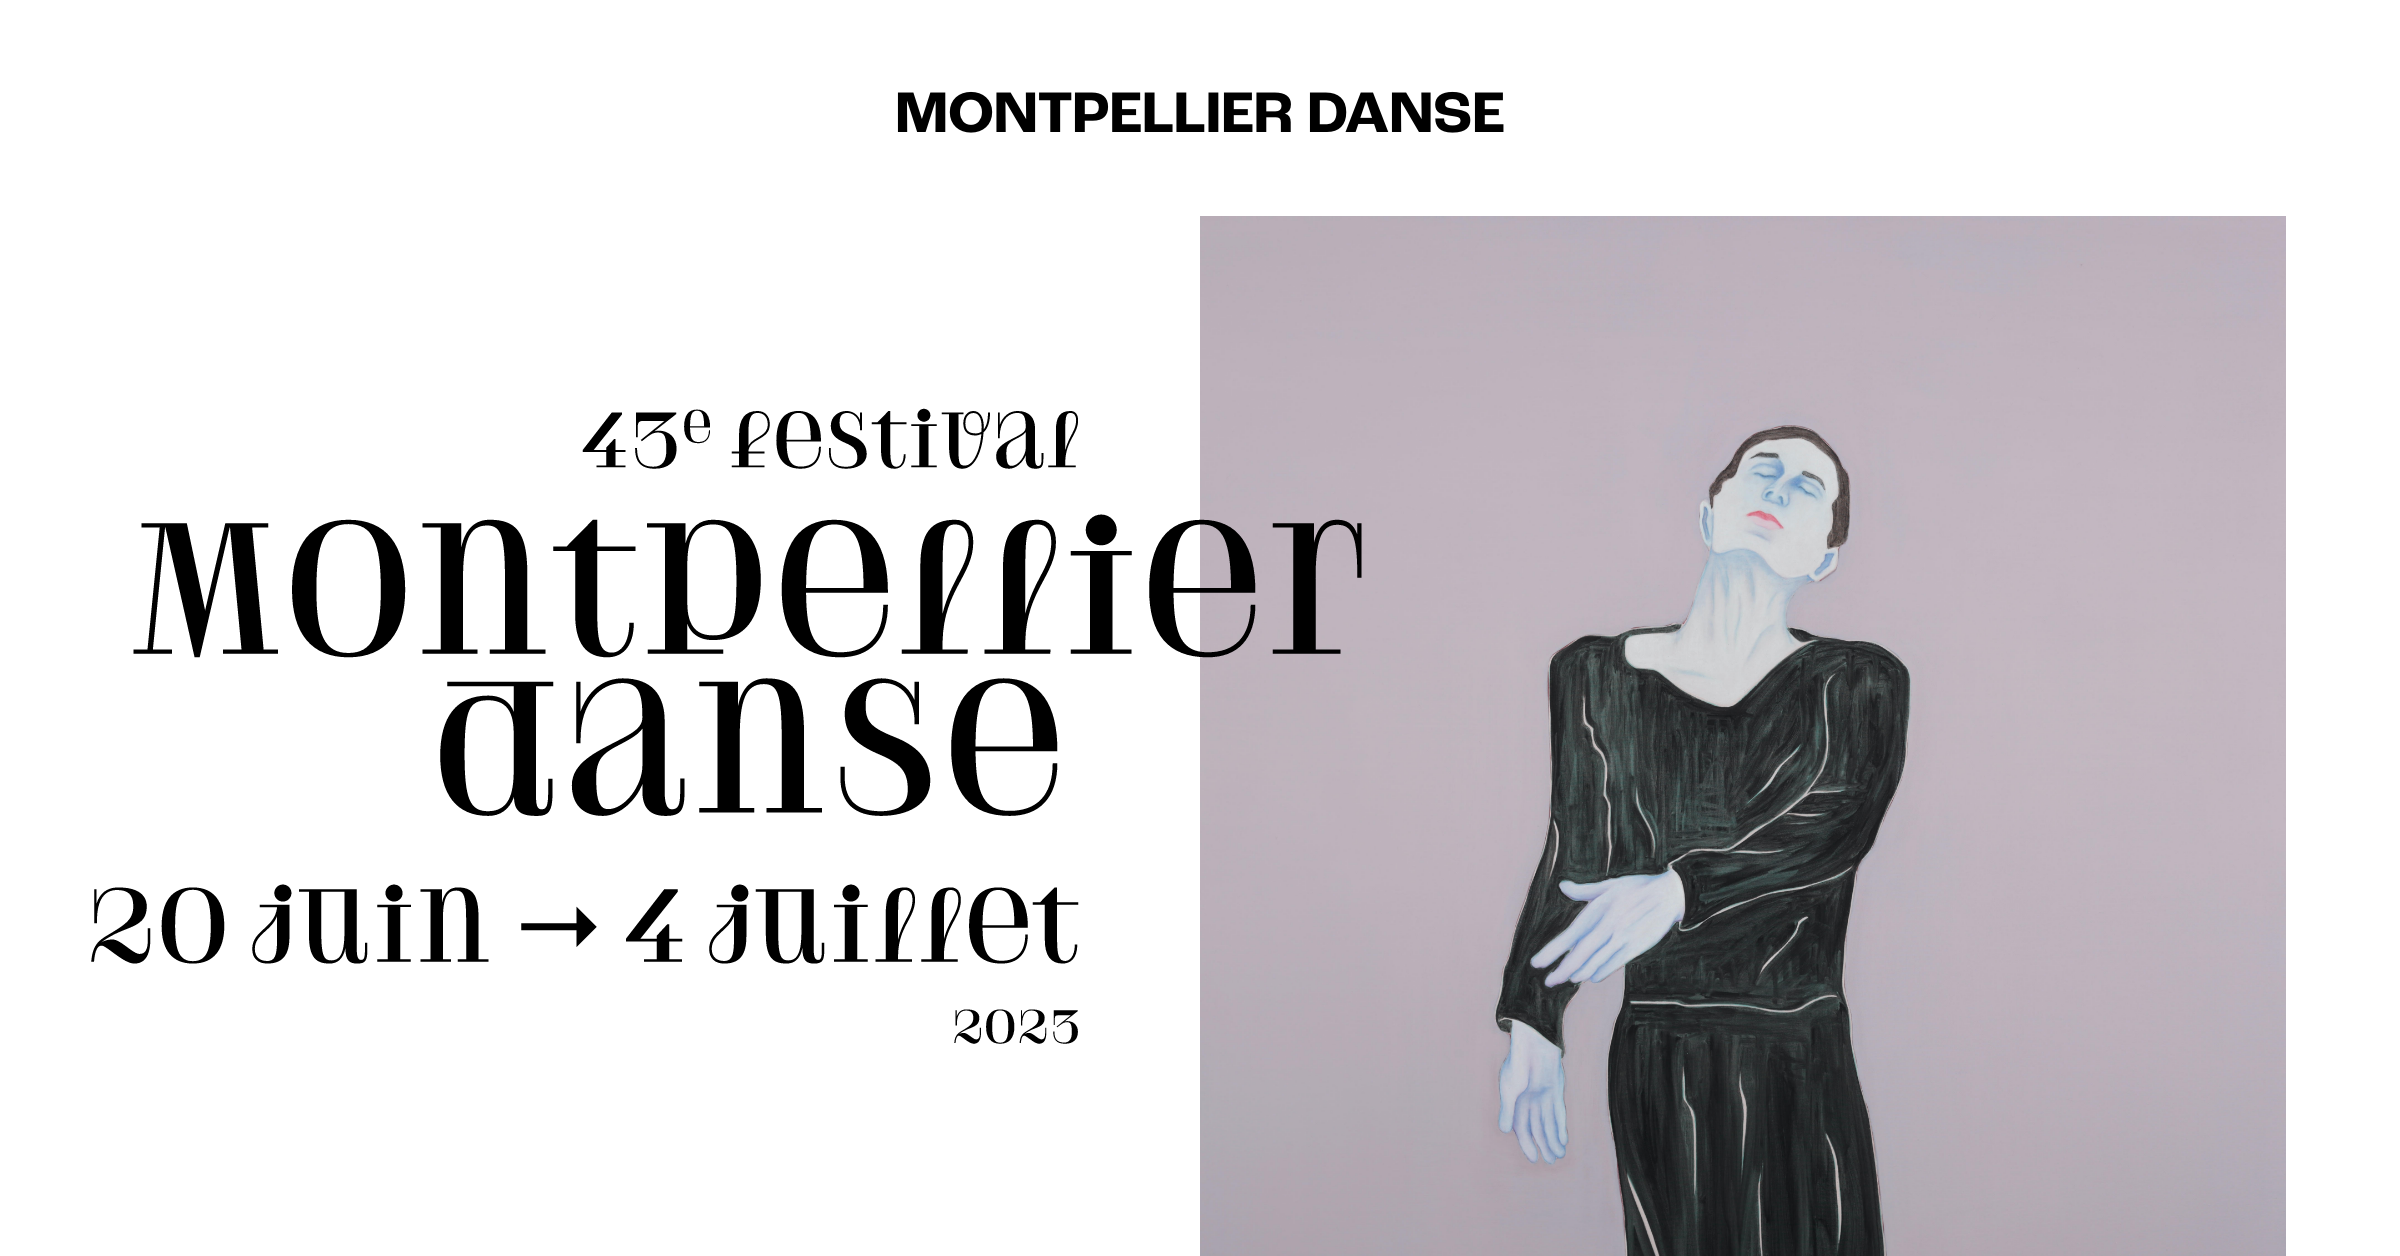 L'Agora - Montpellier Danse